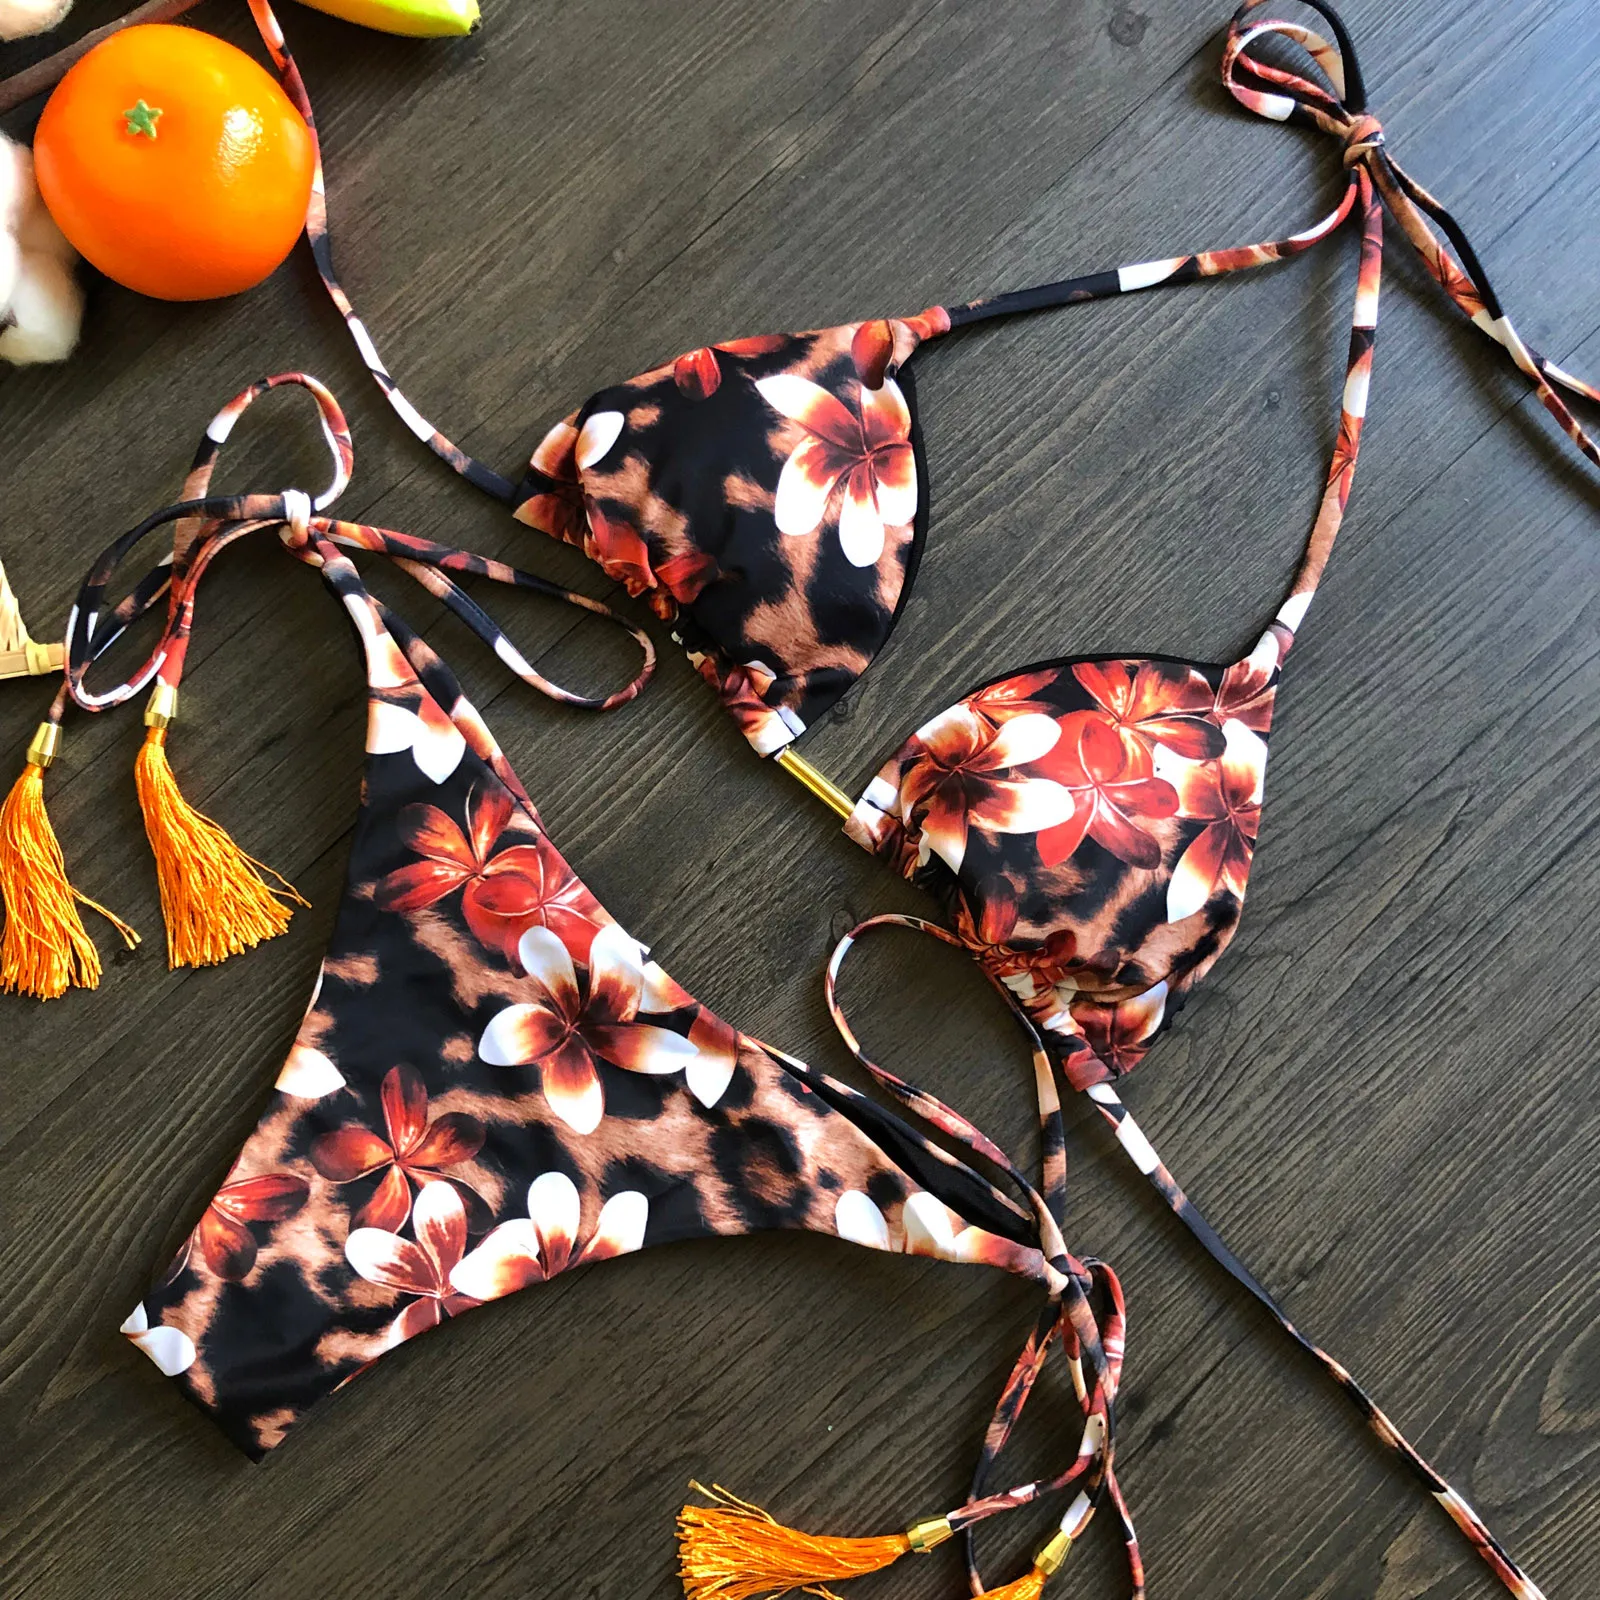 

TELOTUNY Women's swimsuits 2021 Sexy Women Bandeau Bandage Bikini Set Flower Print Push-Up Brazilian Swimwear Beachwear Biquini